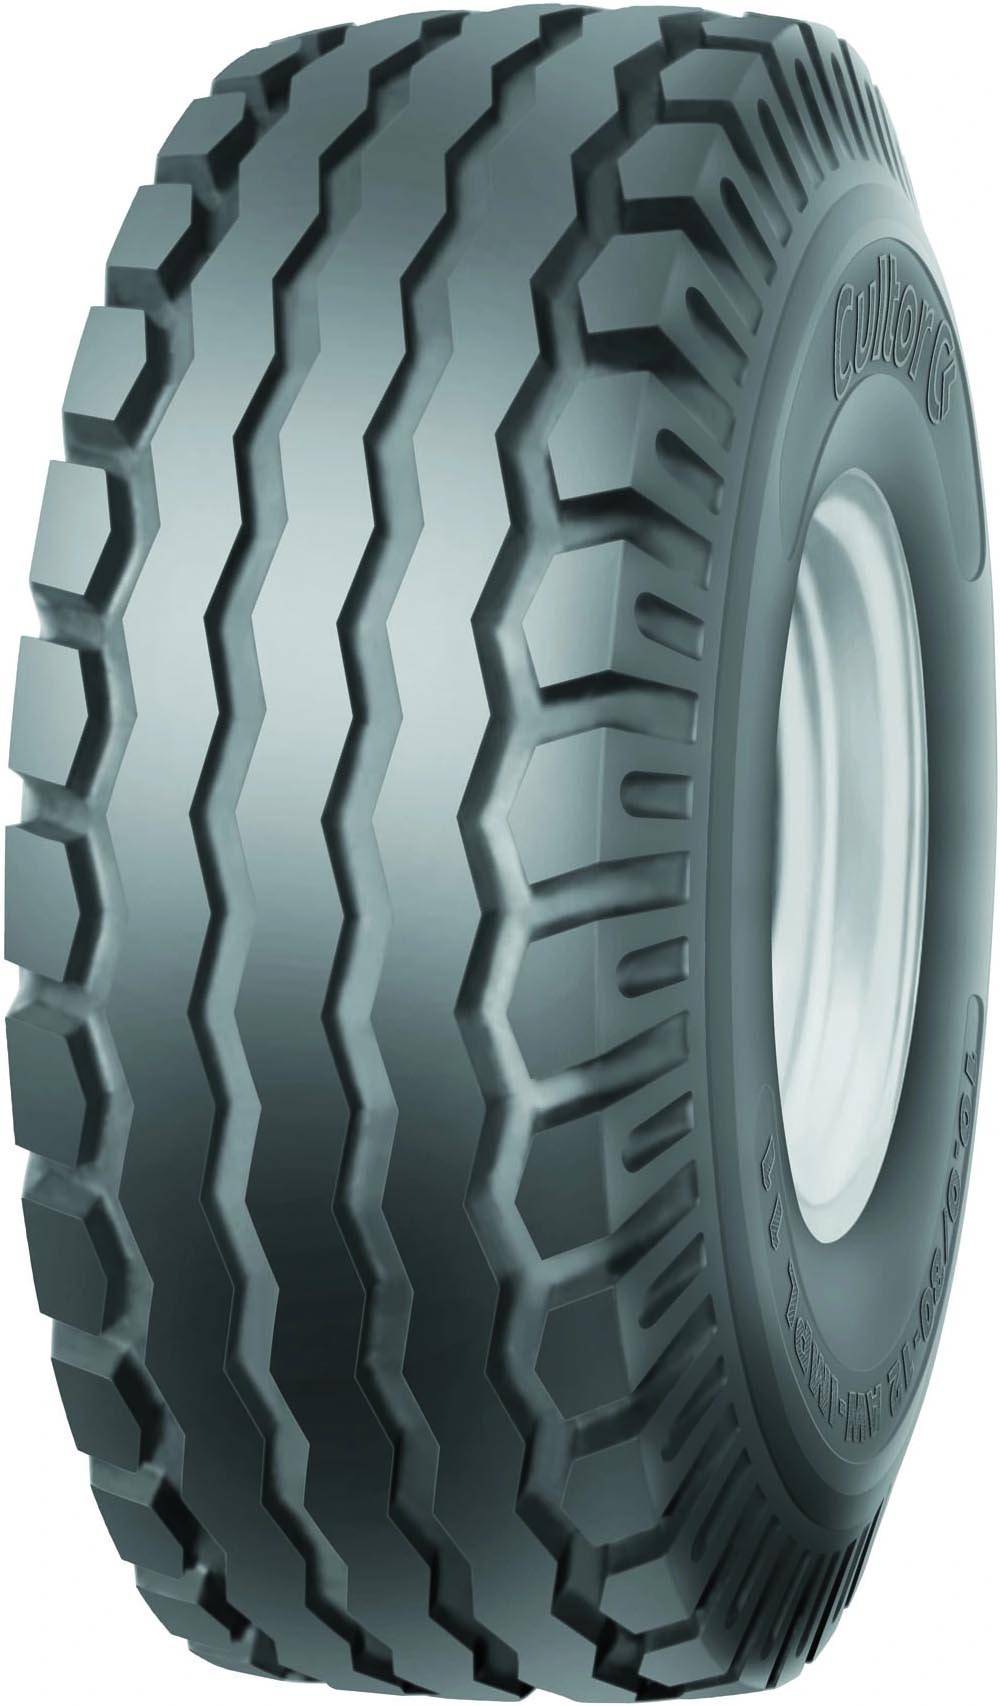 product_type-industrial_tires CULTOR AW-Impl 11 14PR TT 7.5 R16 P